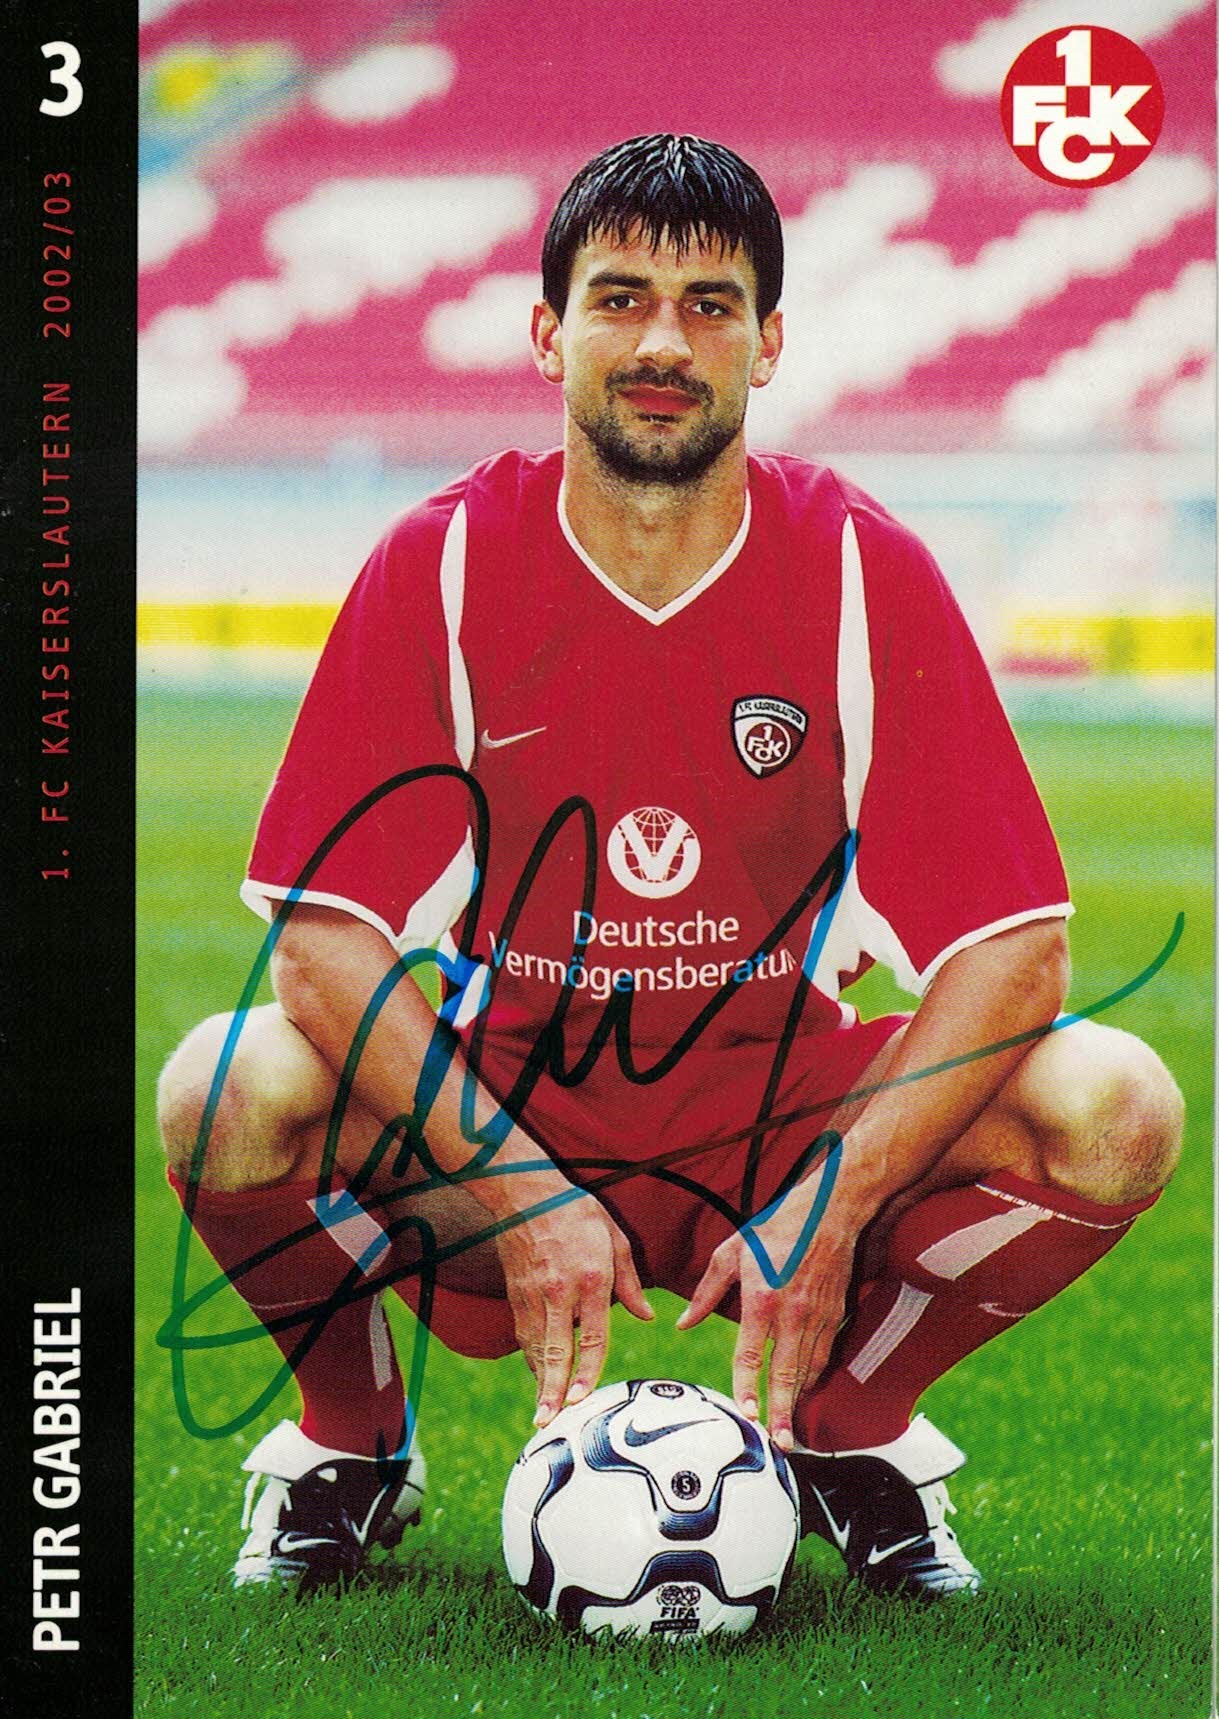 Petr Gabriel 1. FC Kaiserslautern 2002/03 Podpisova karta autogram